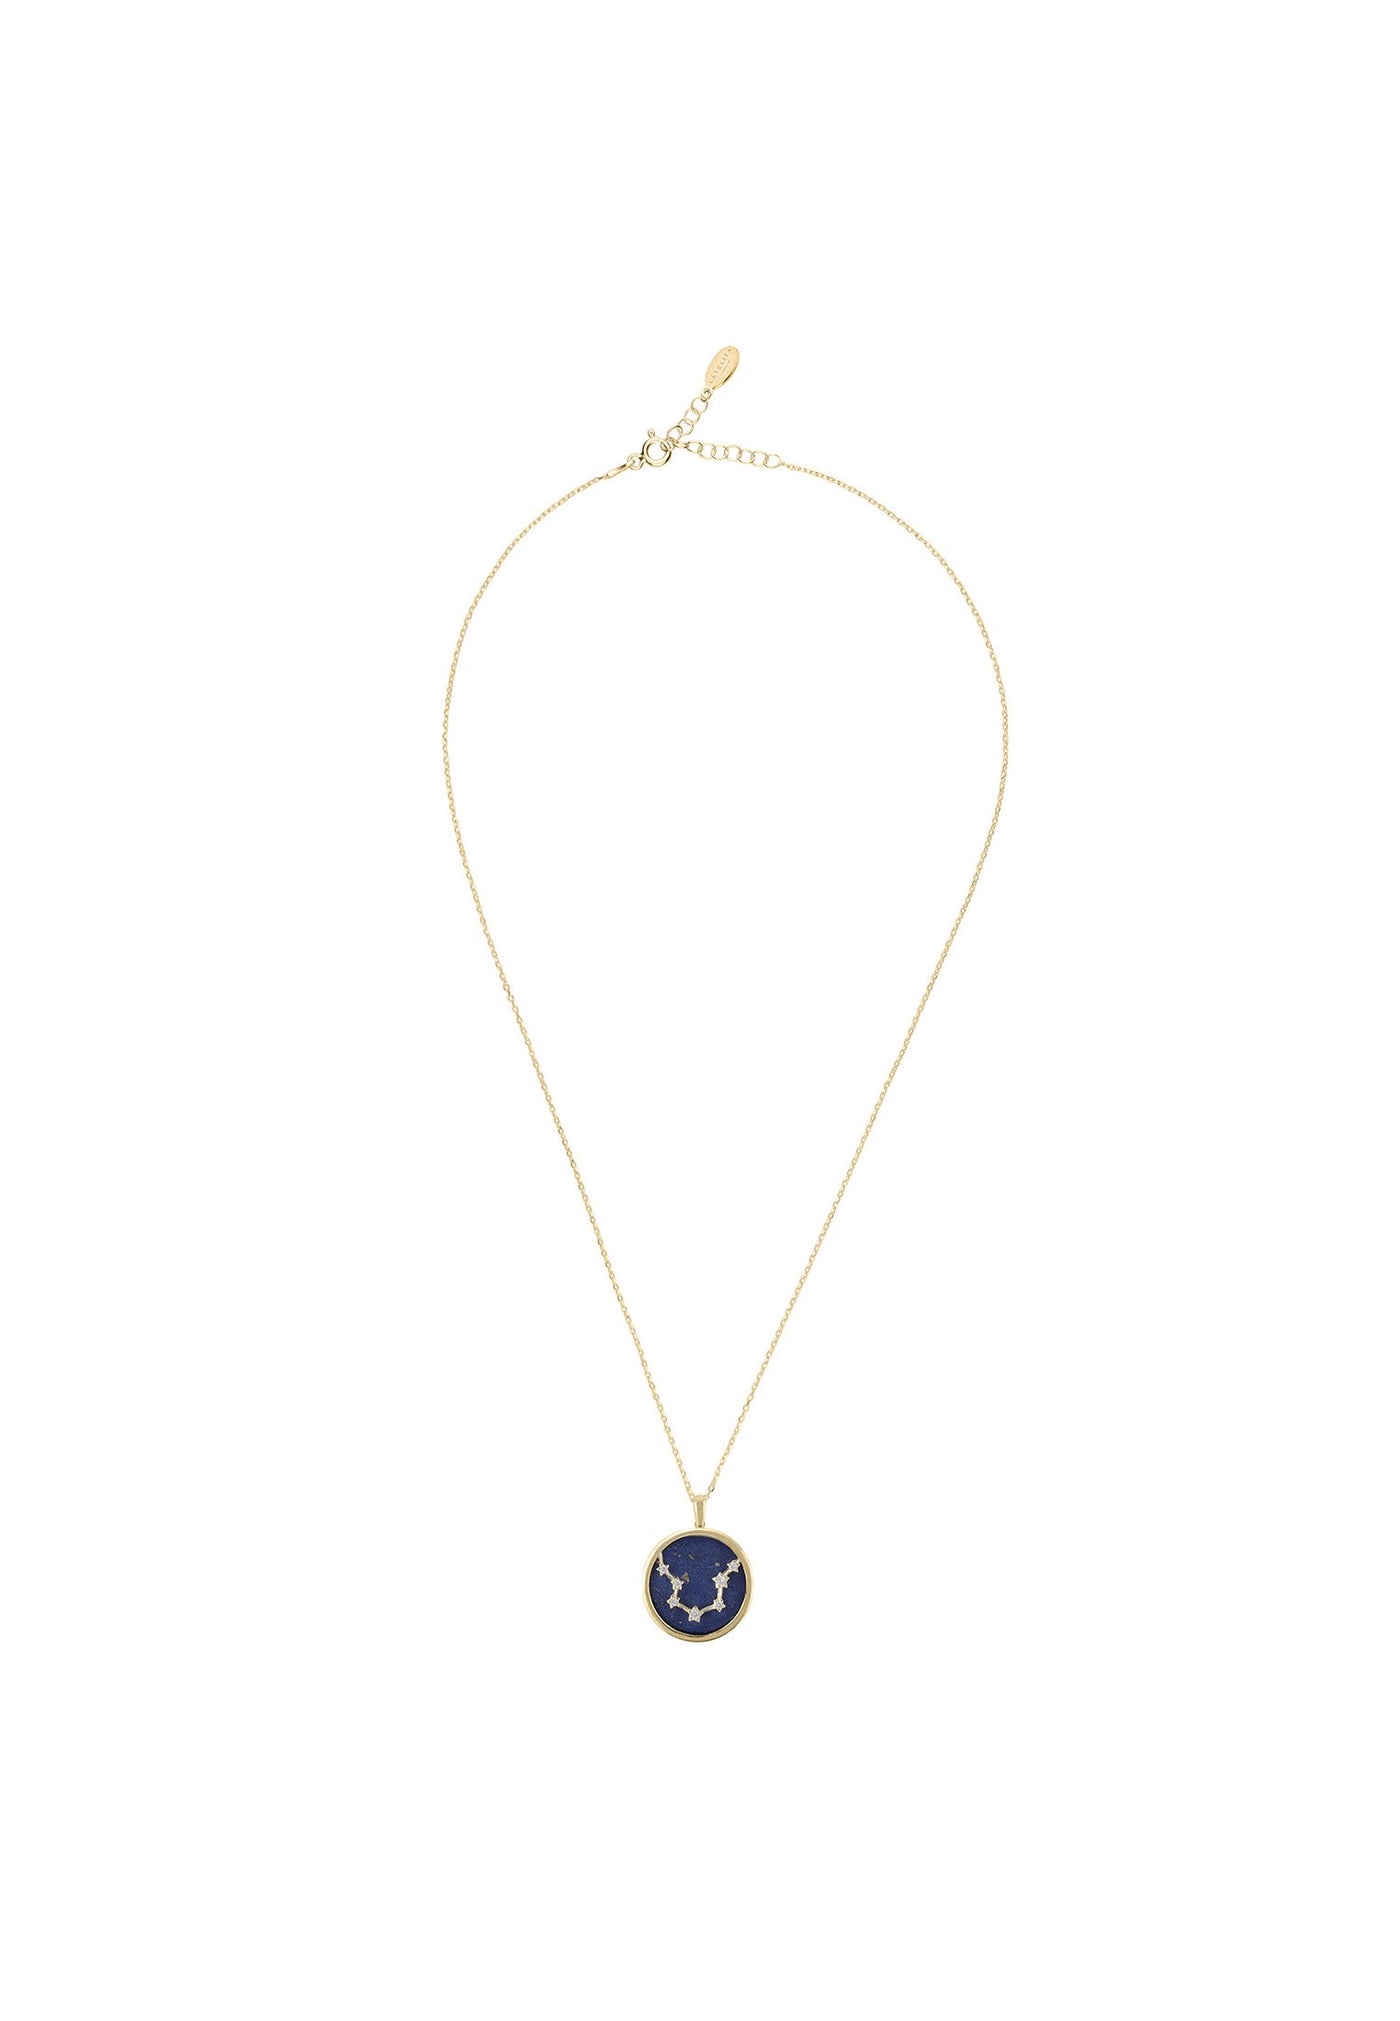 Aquarius - necklace - 22 carat gold plated - lapis lazuli with white zirconia